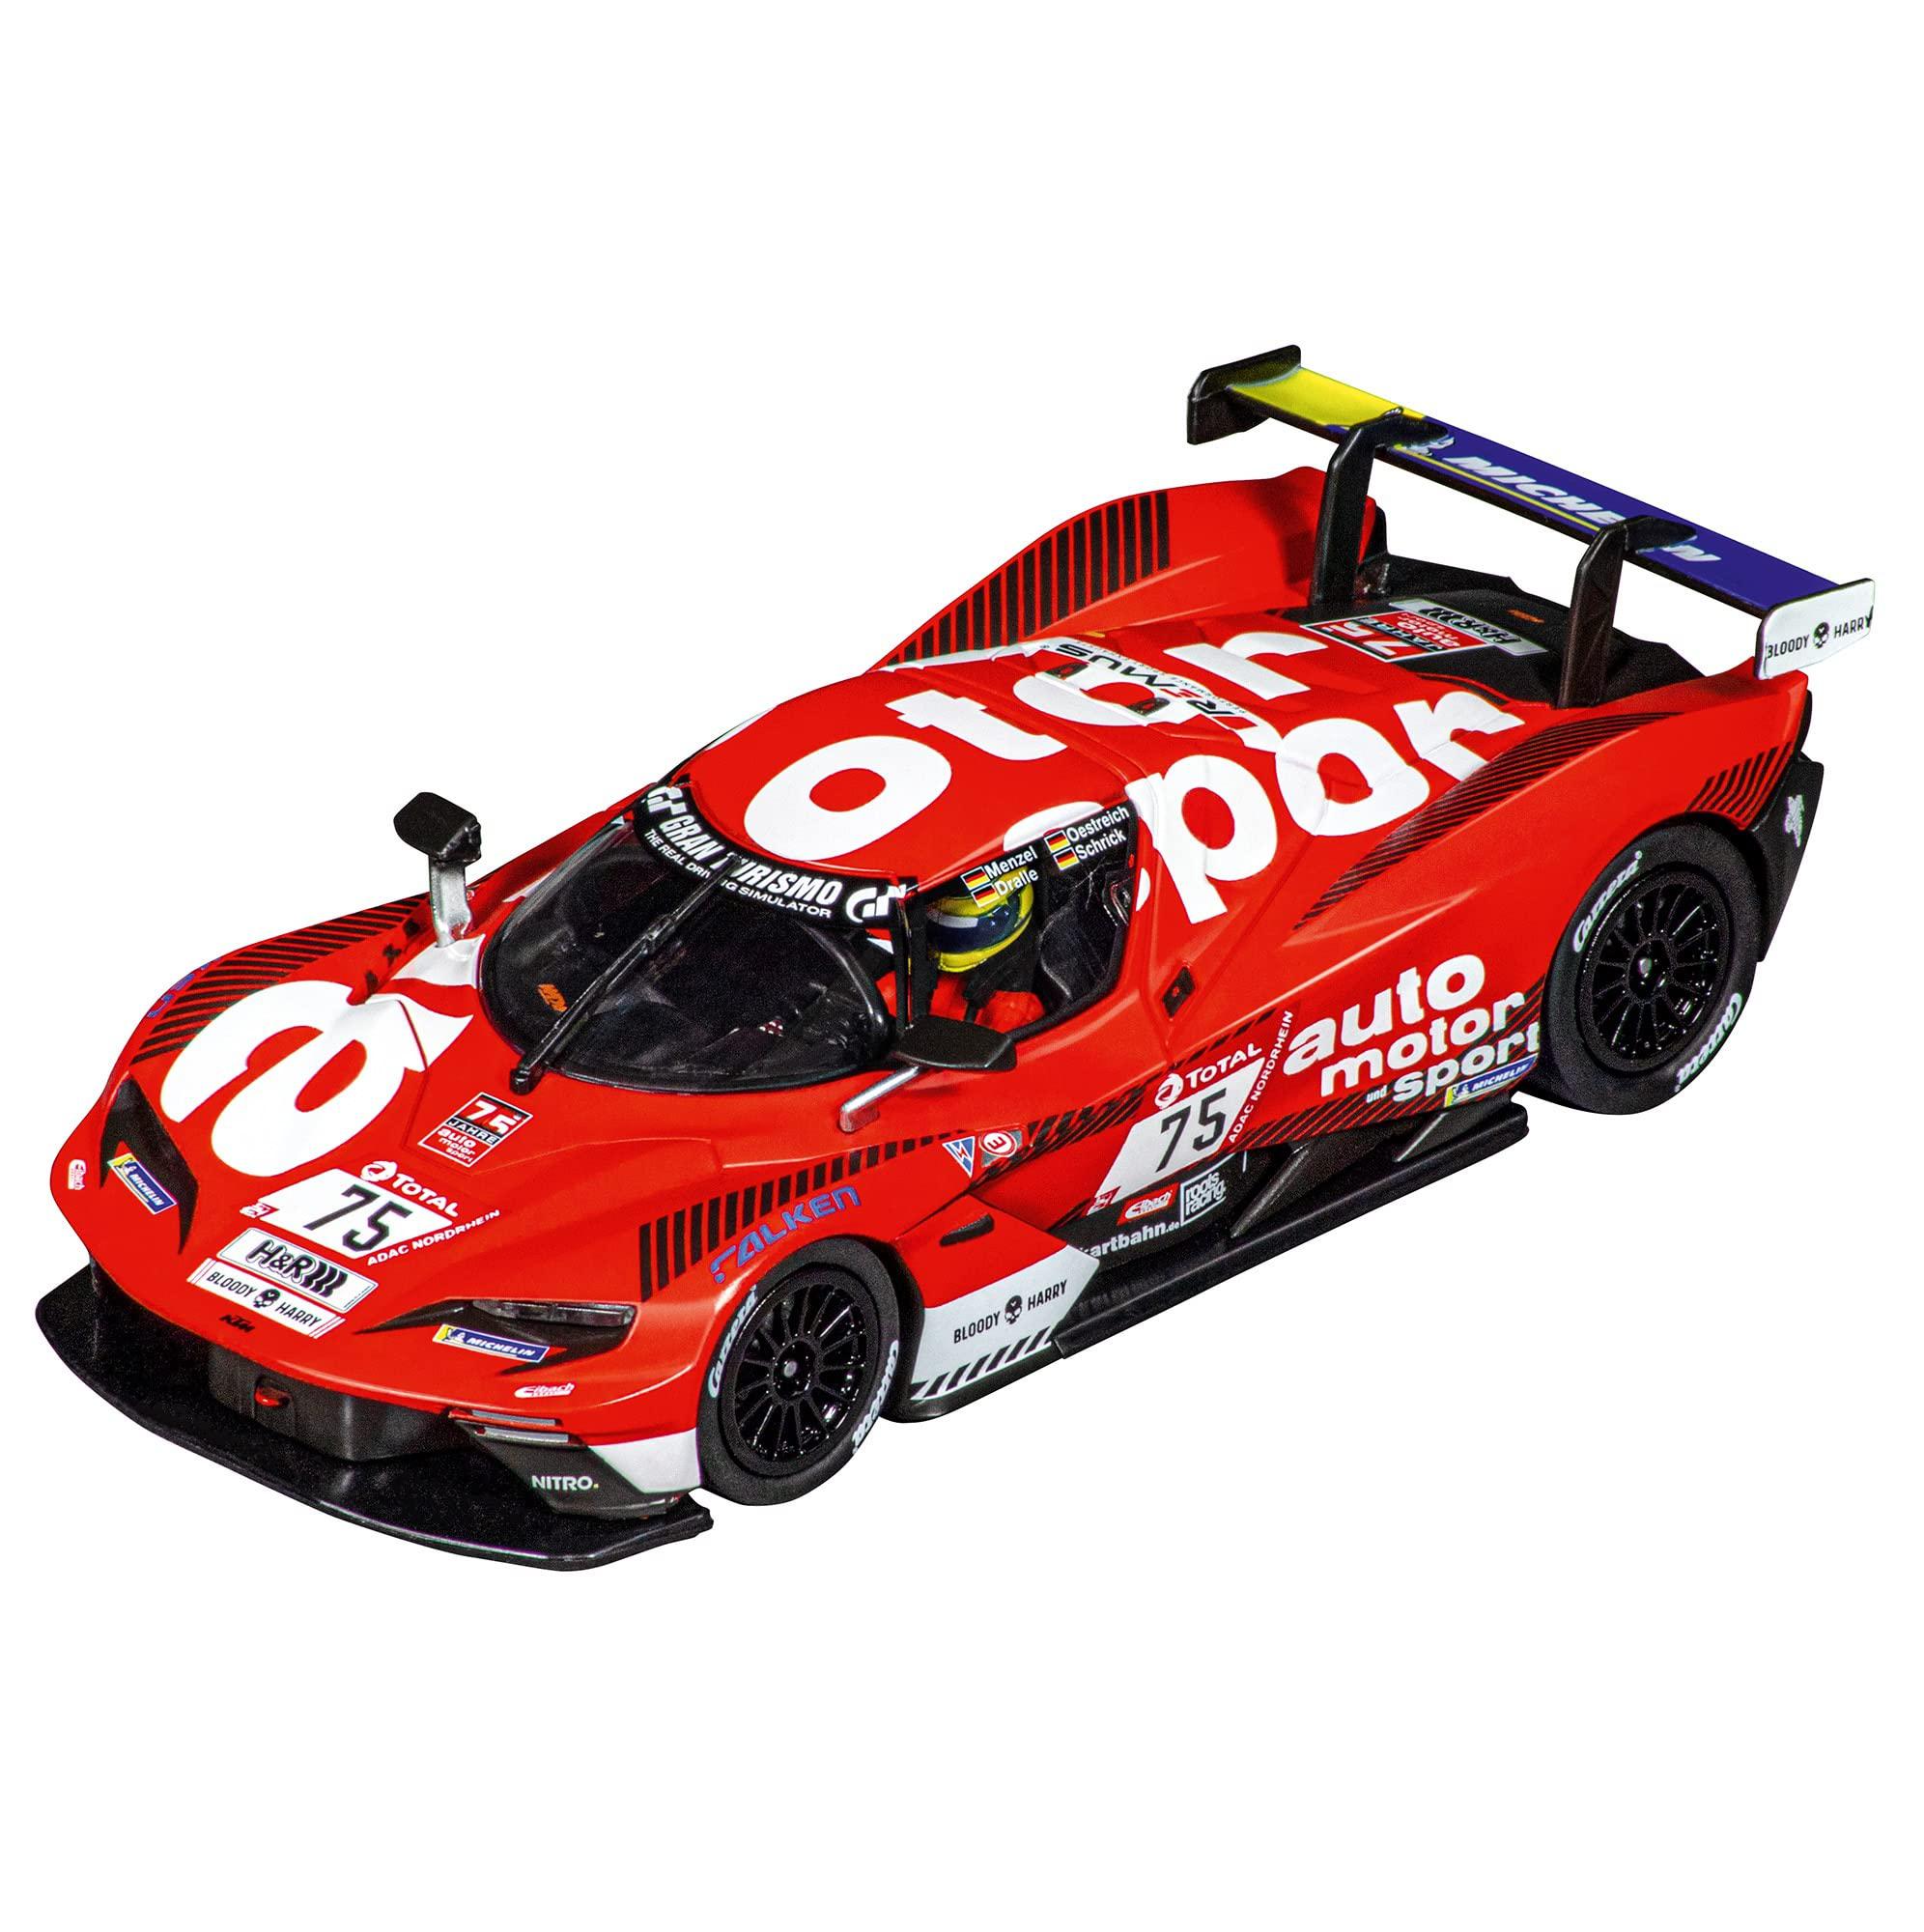 carrera 31013 ktm x-bow gtx auto motor und sport no.75 1:32 scale digital slot car racing vehicle digital slot car race track